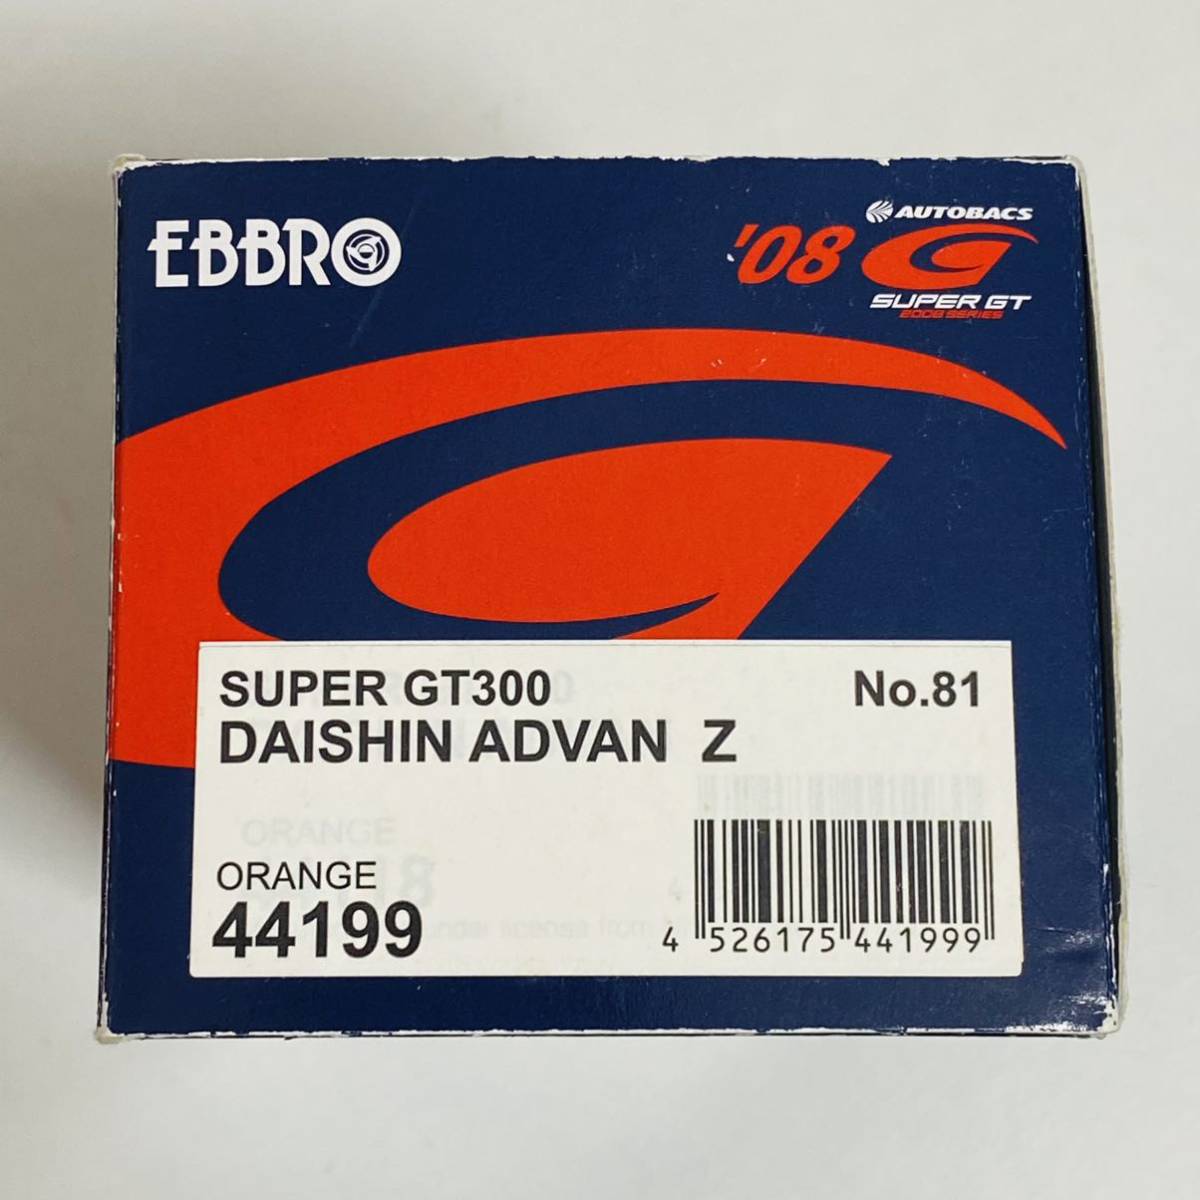 [ secondhand goods ]EBBRO EBBRO super GT SUPER GT300 DAISHIN ADVAN Z orange 1/43 scale 44199 No.81 minicar 